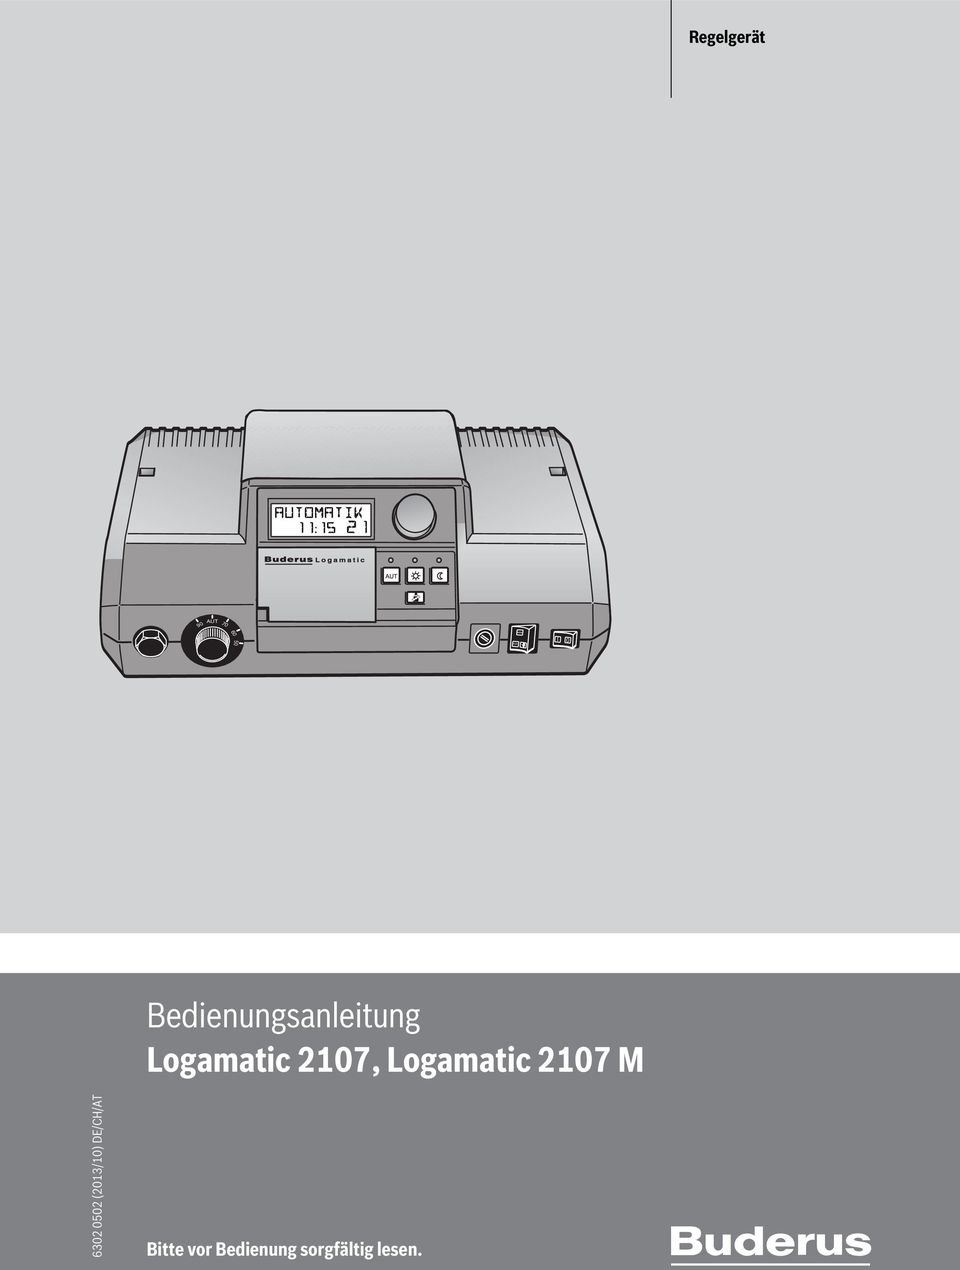 Logamatic 2107 M 6302 0502 (2013/10)